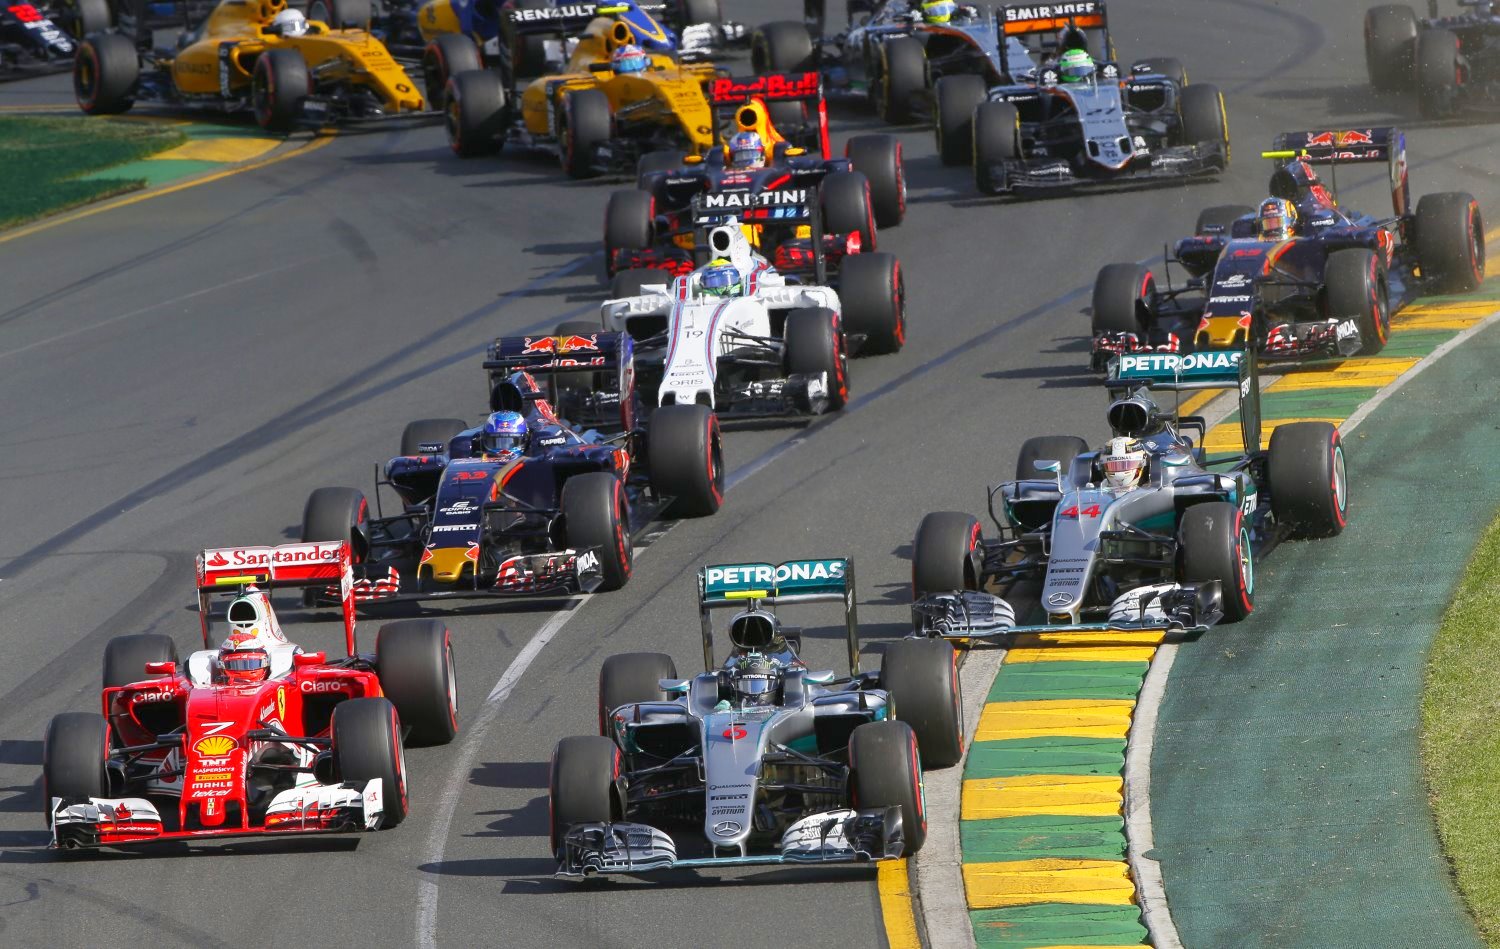 Australia to again open 2017 F1 season